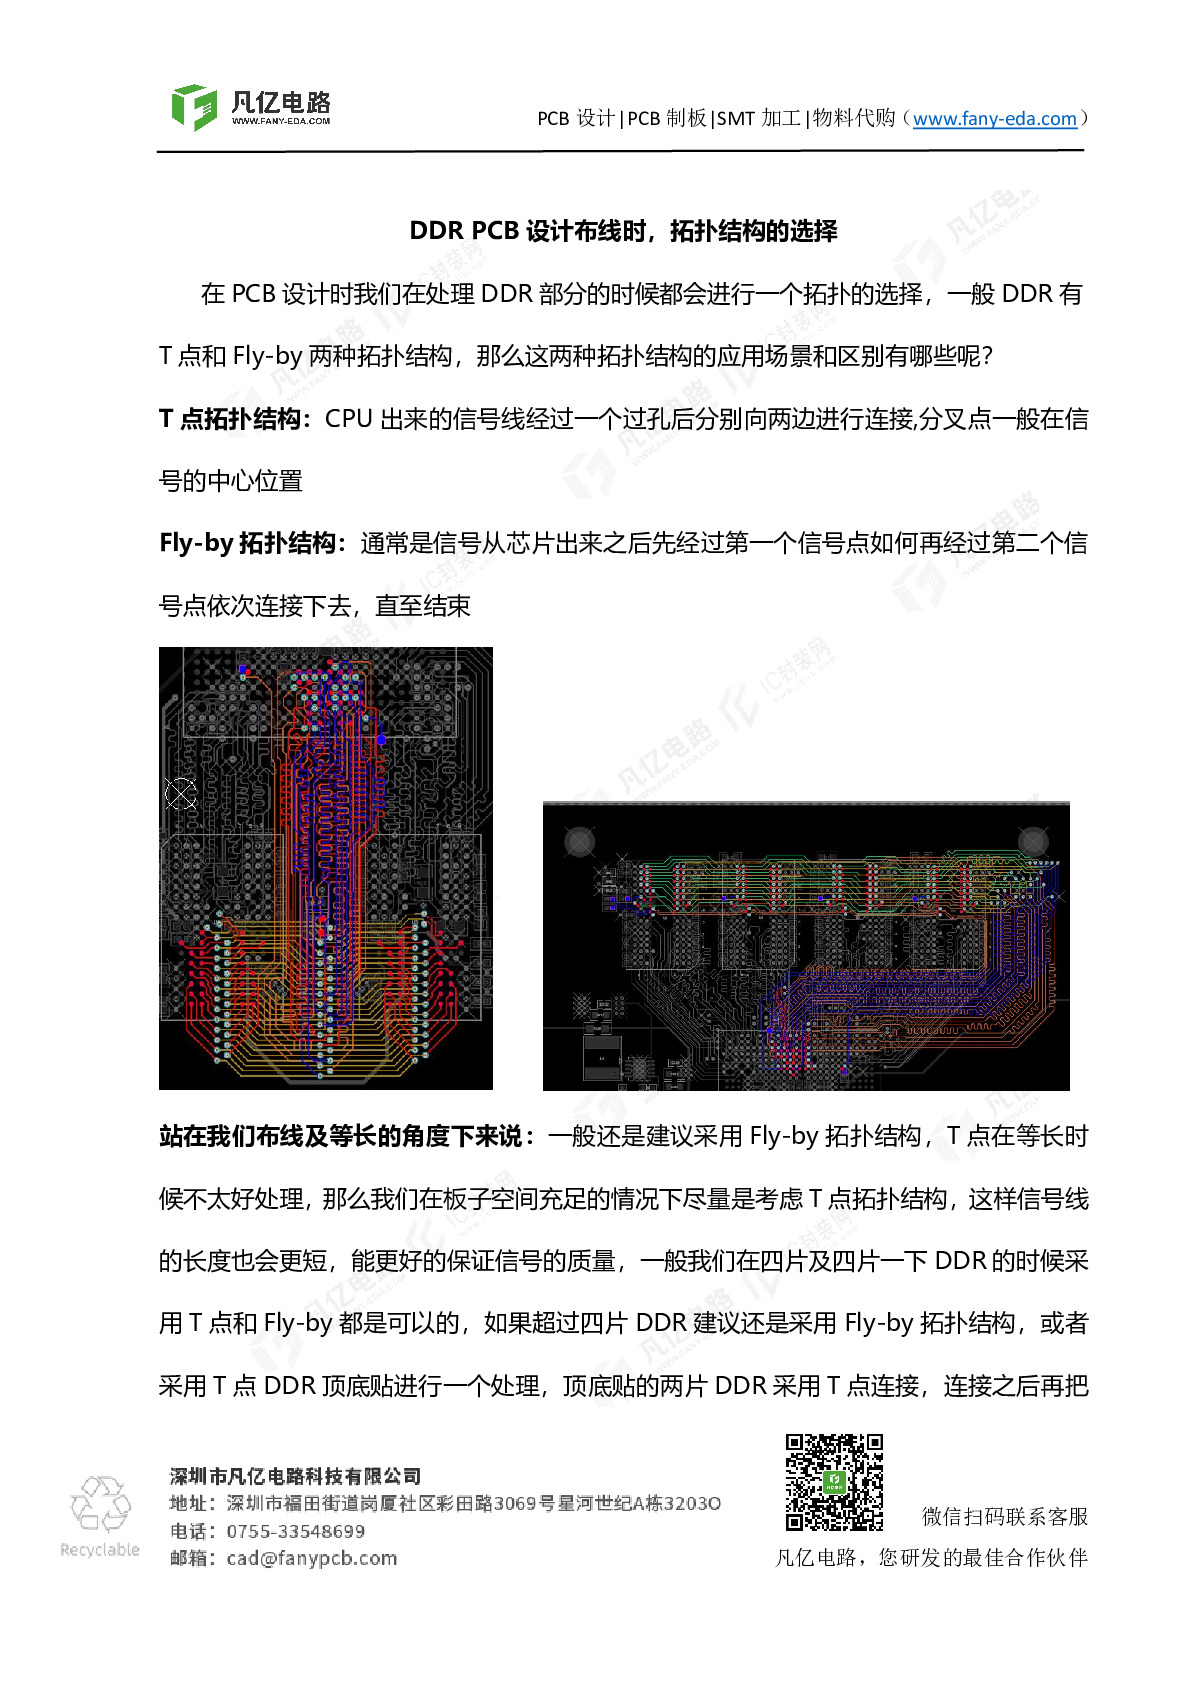 DDR PCB设计布线时，拓扑结构的选择